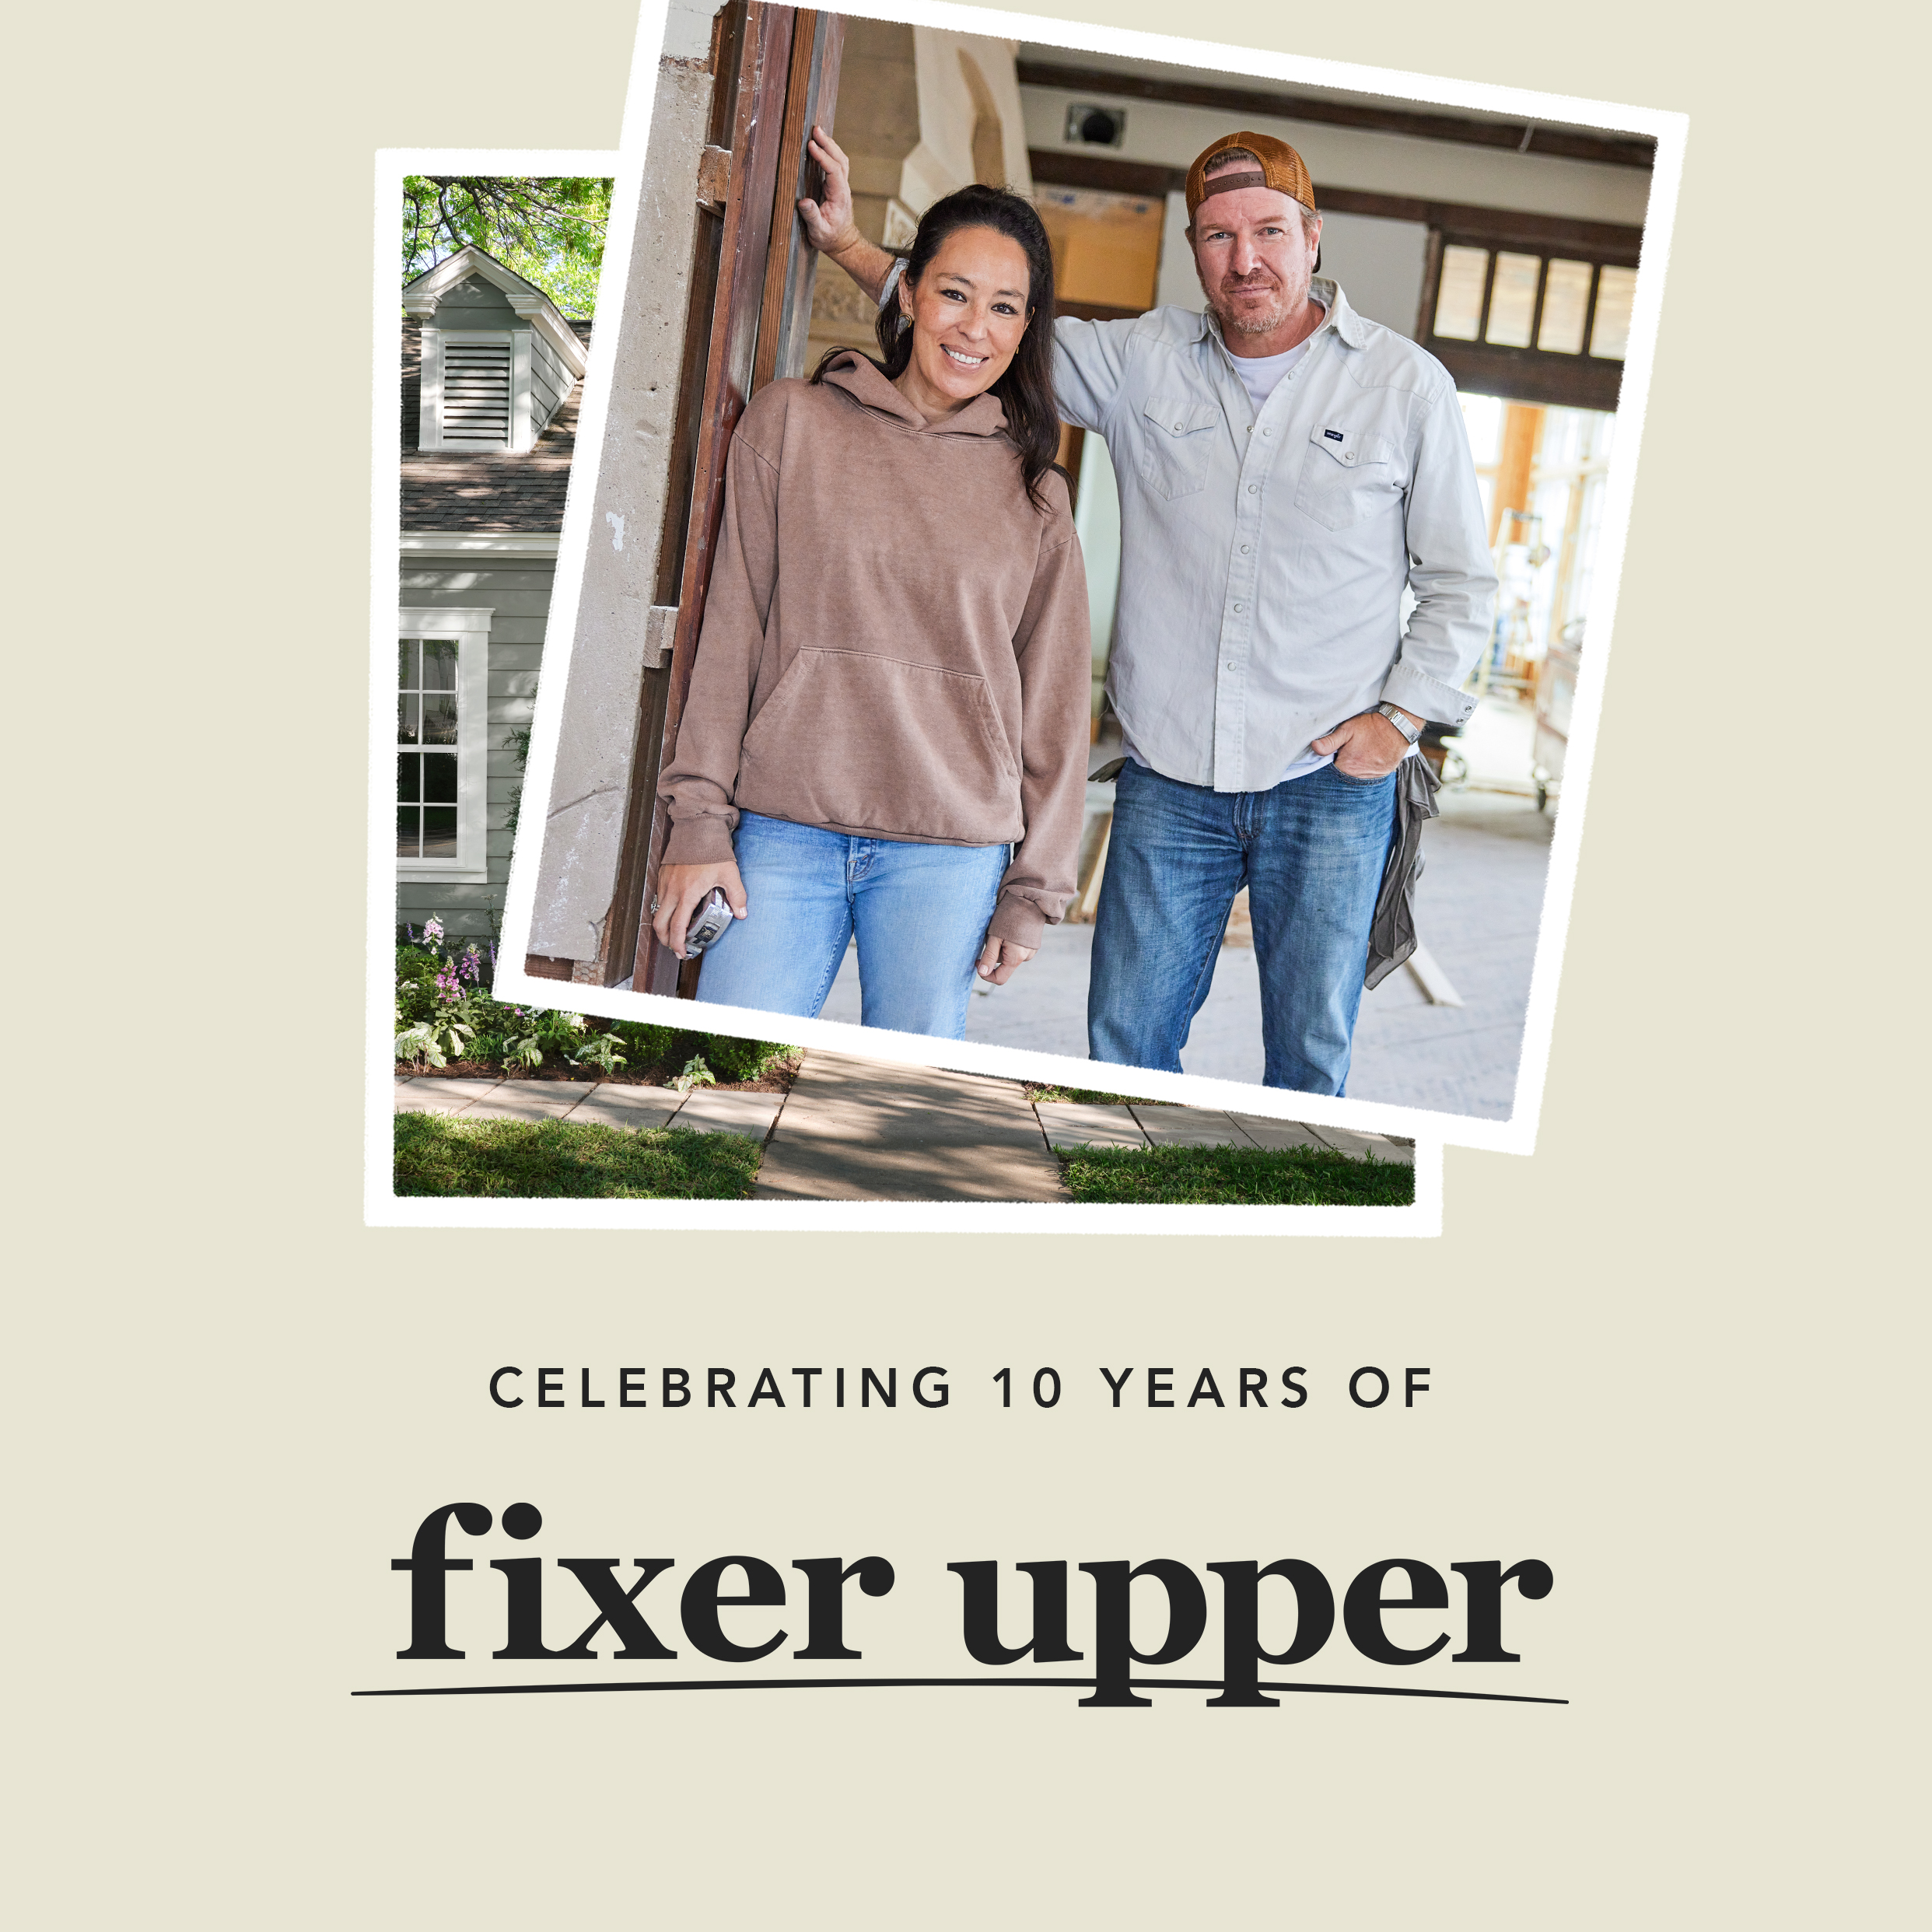 Celebrating 10 years of fixer upper